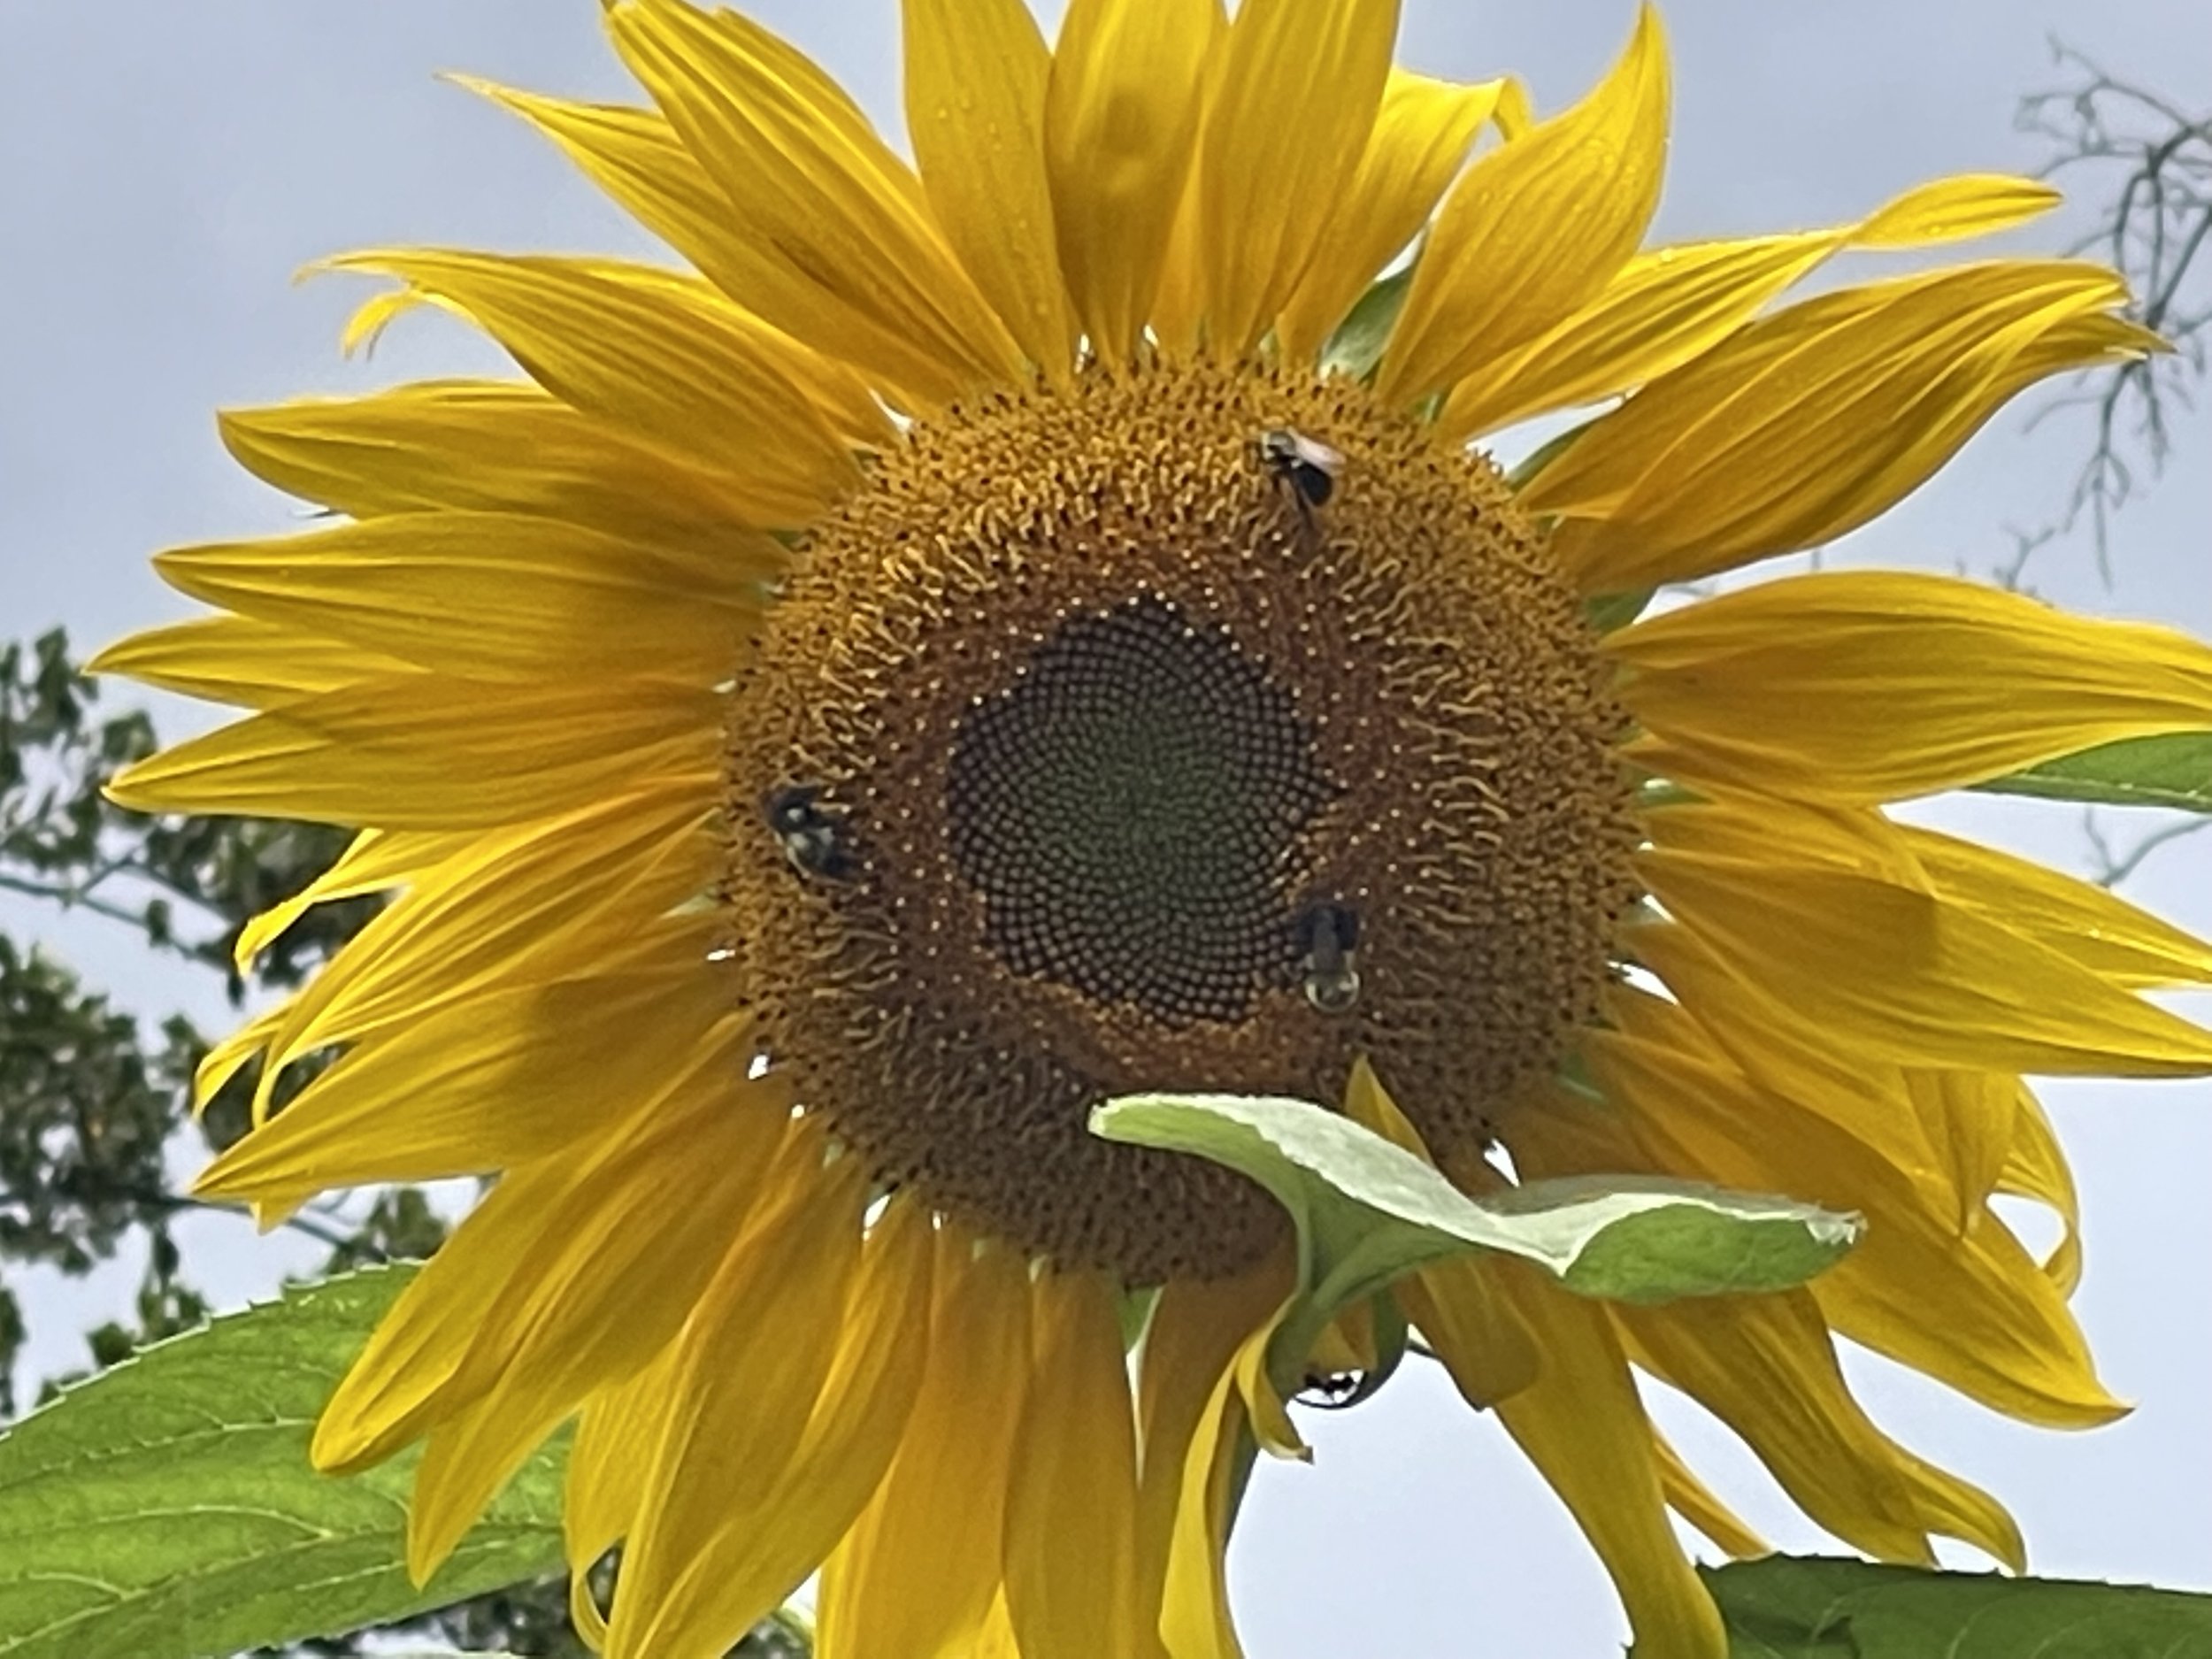 Thunderhorse-Hollow-Farm-summer-big-sunflower.jpg